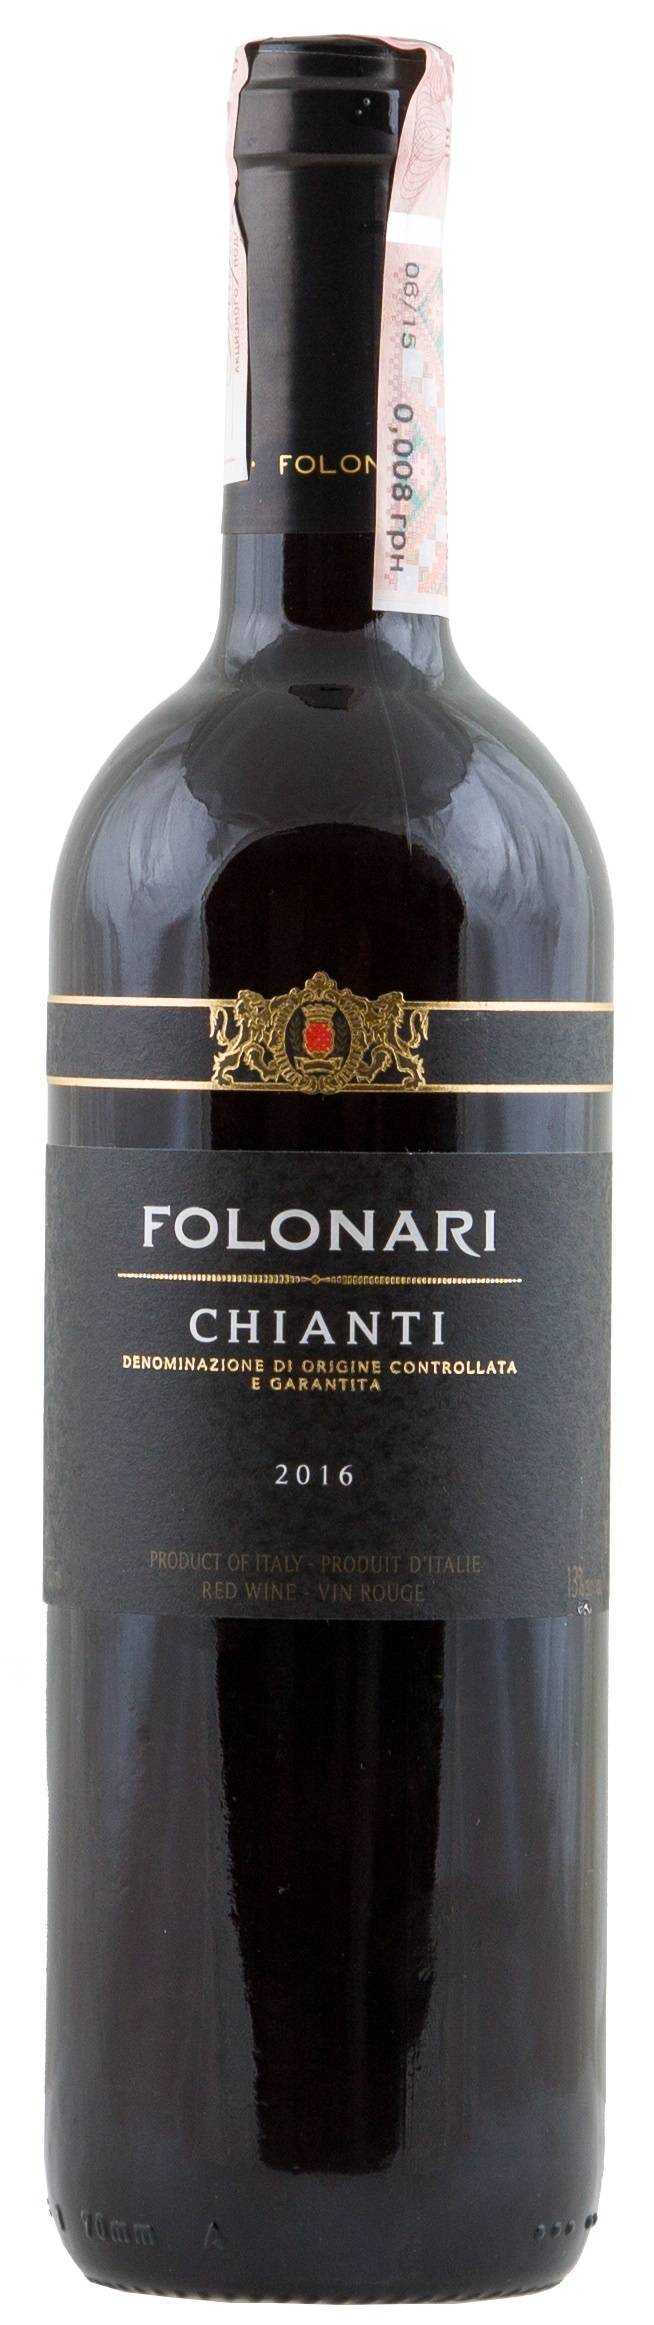 Красные вина "кьянти": "chianti руффино", "chianti классико" и "chianti резерва"